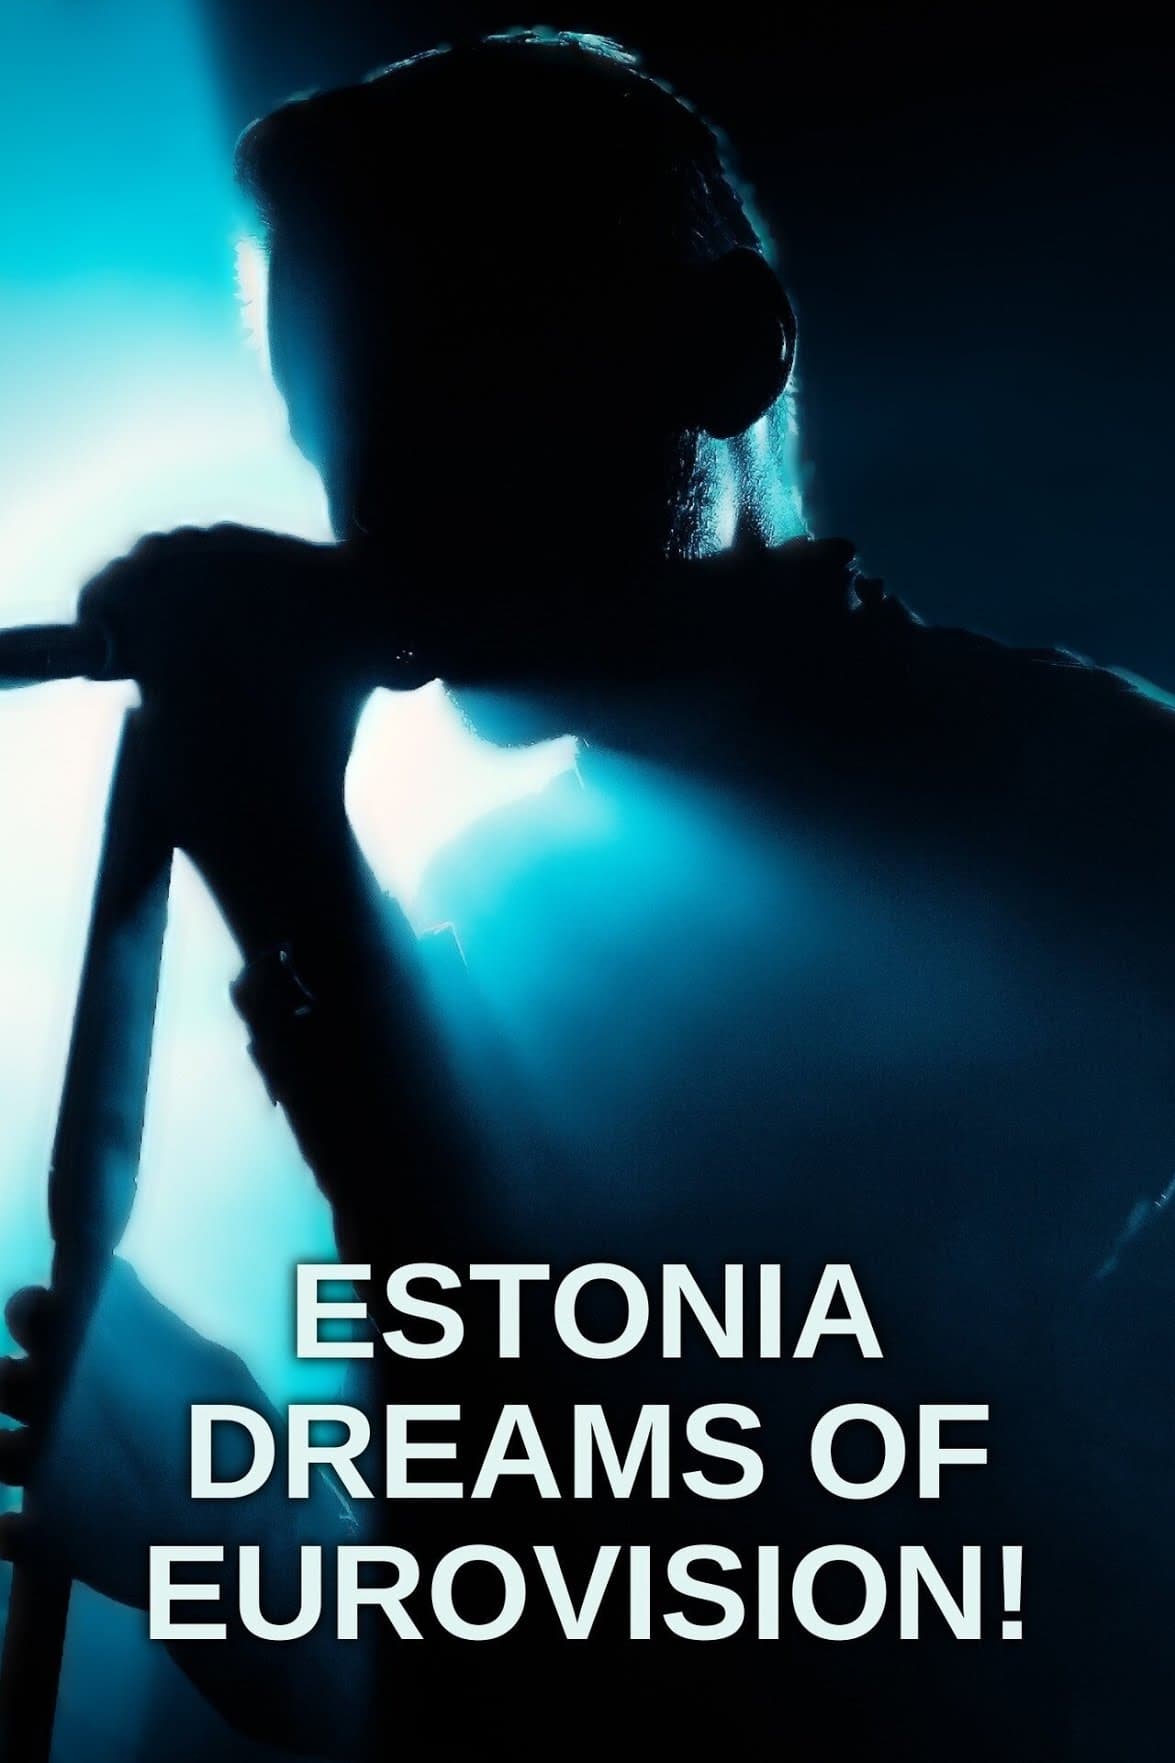 Estonia Dreams of Eurovision!